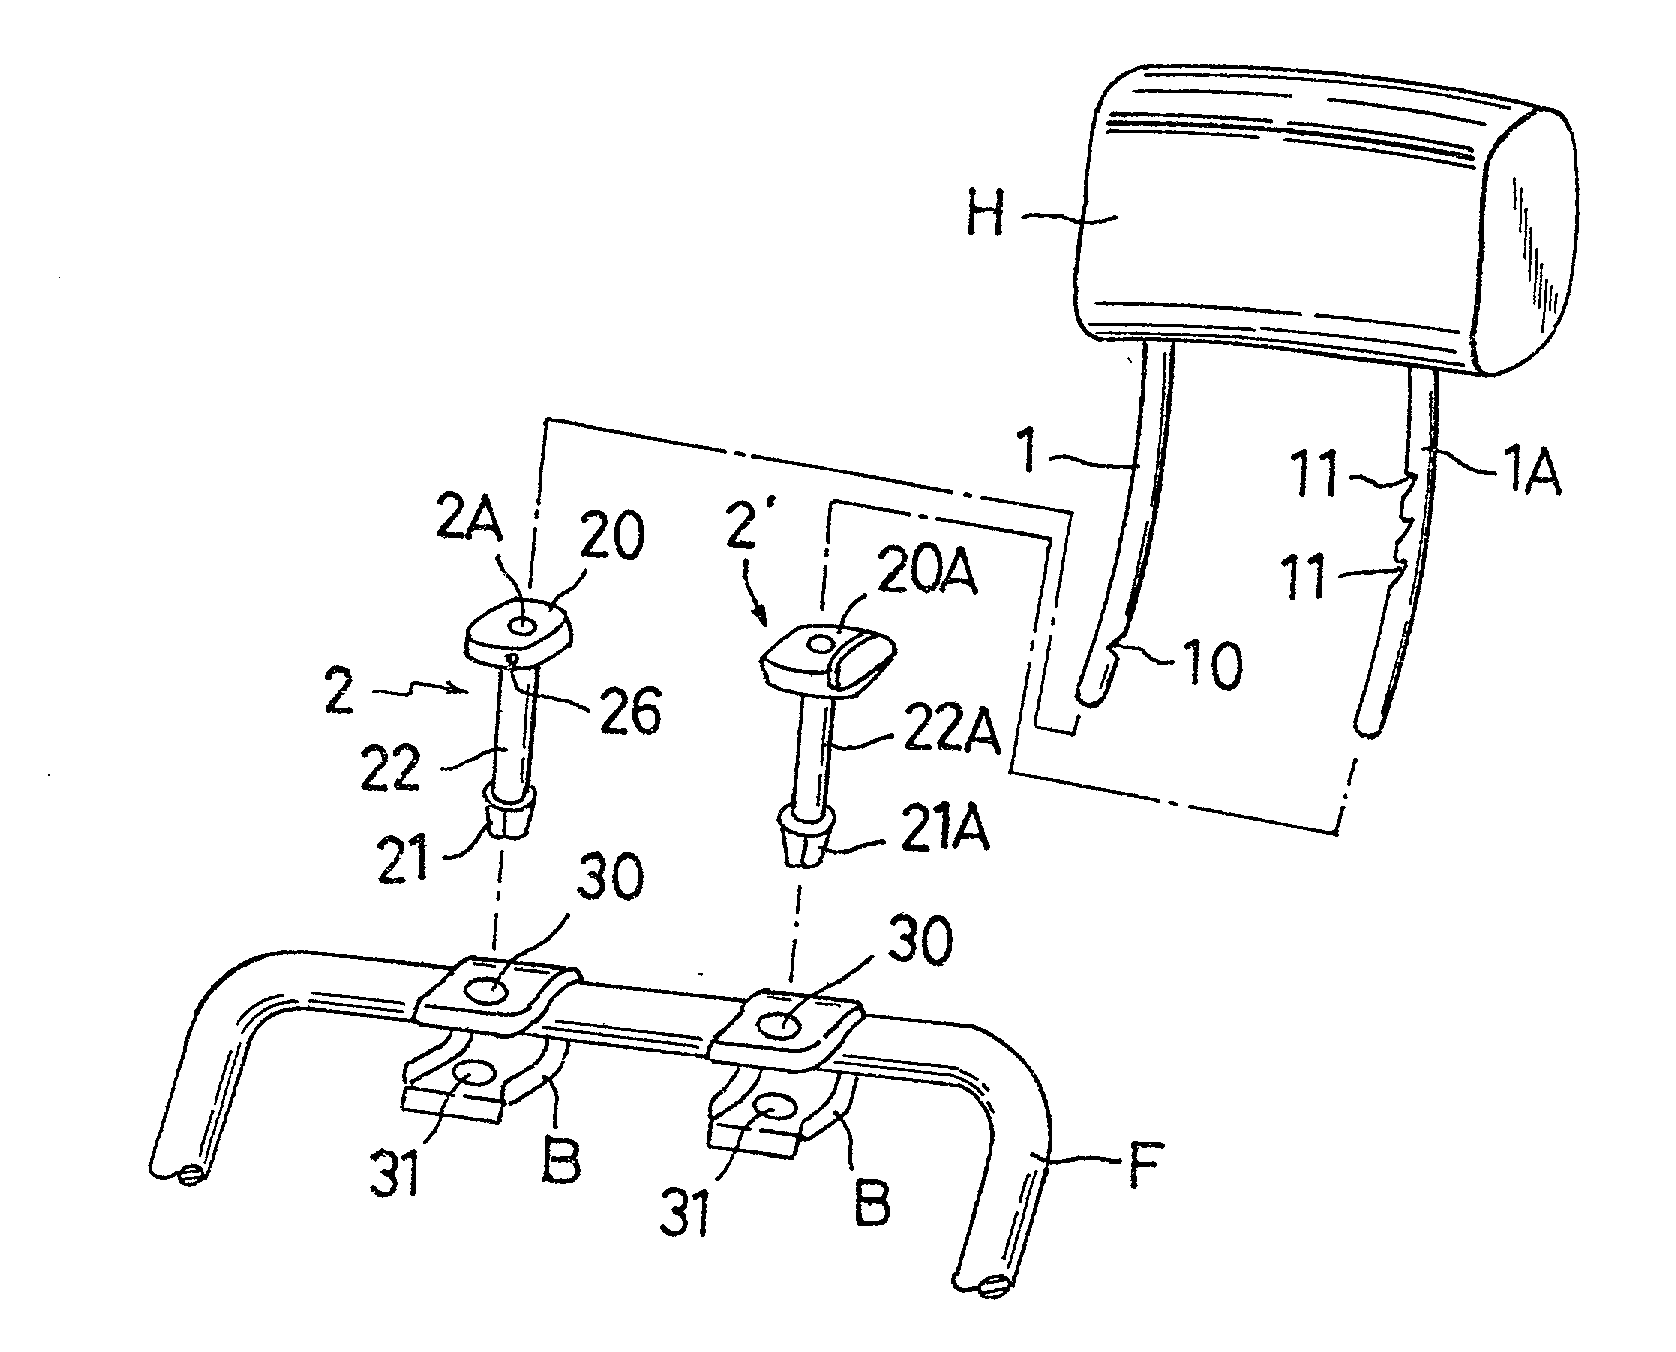 Locking/unlocking mechanism for headrest